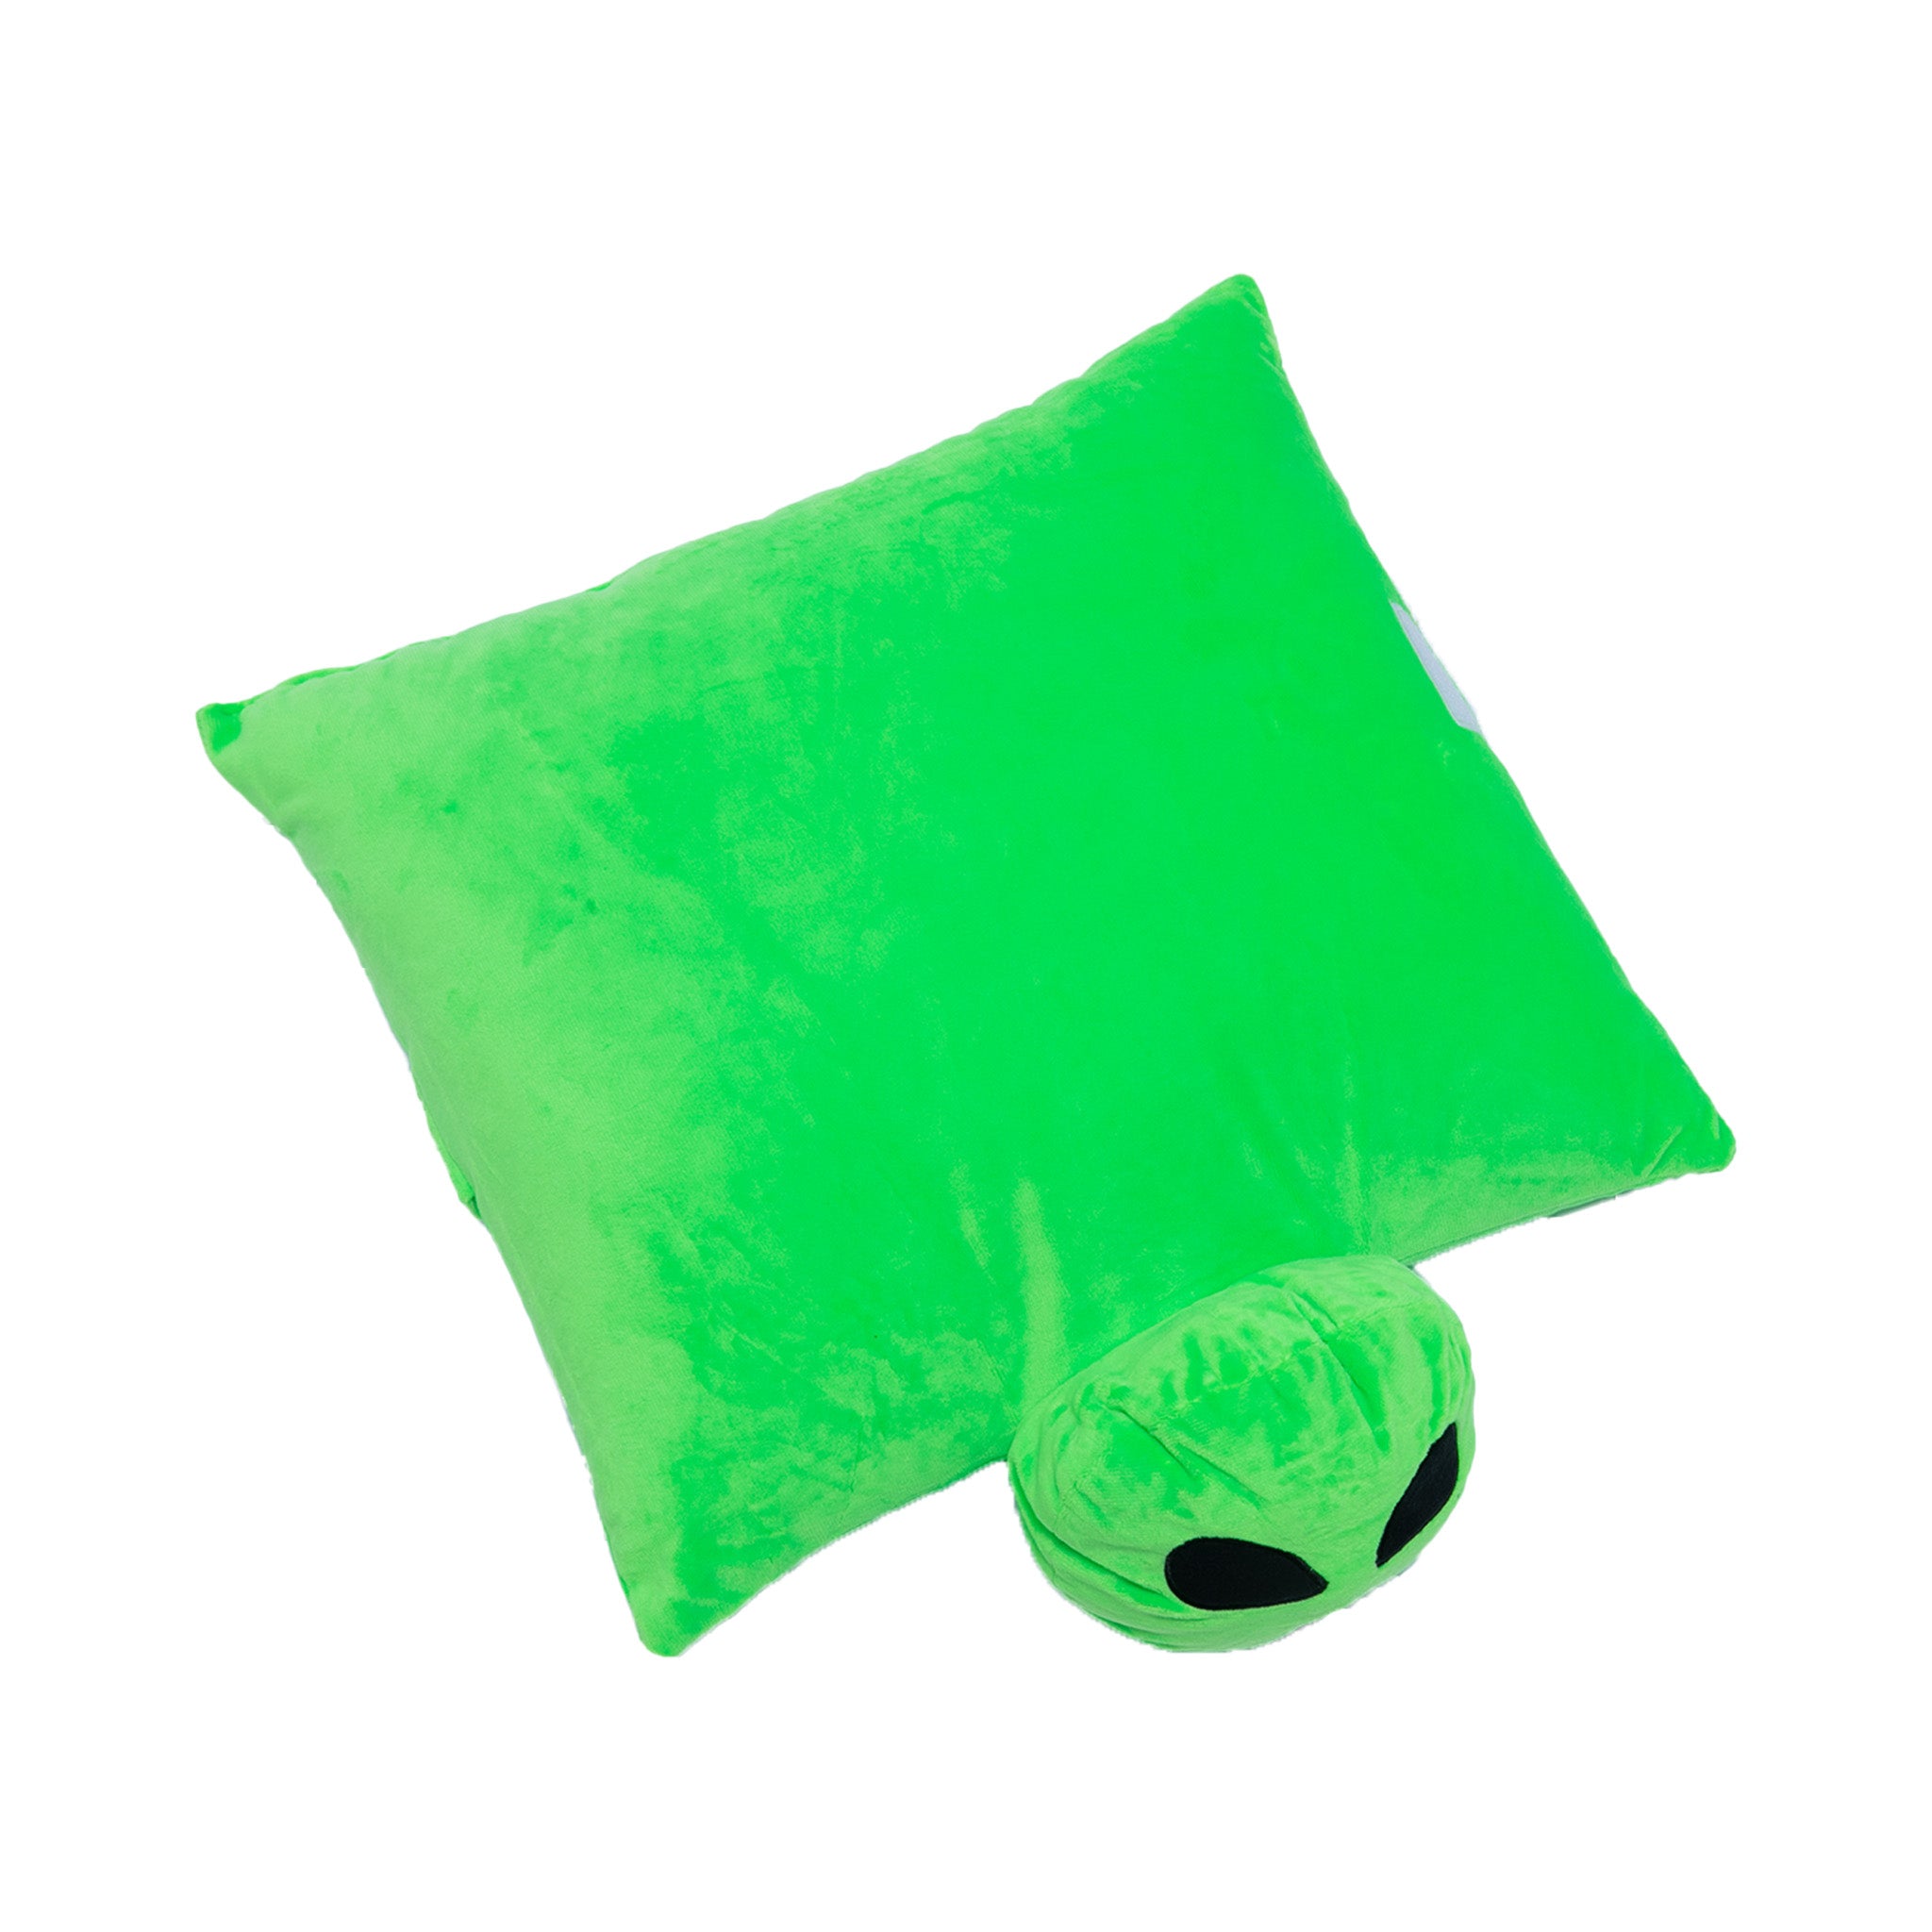 Lord Alien Pillow Friend (Green)